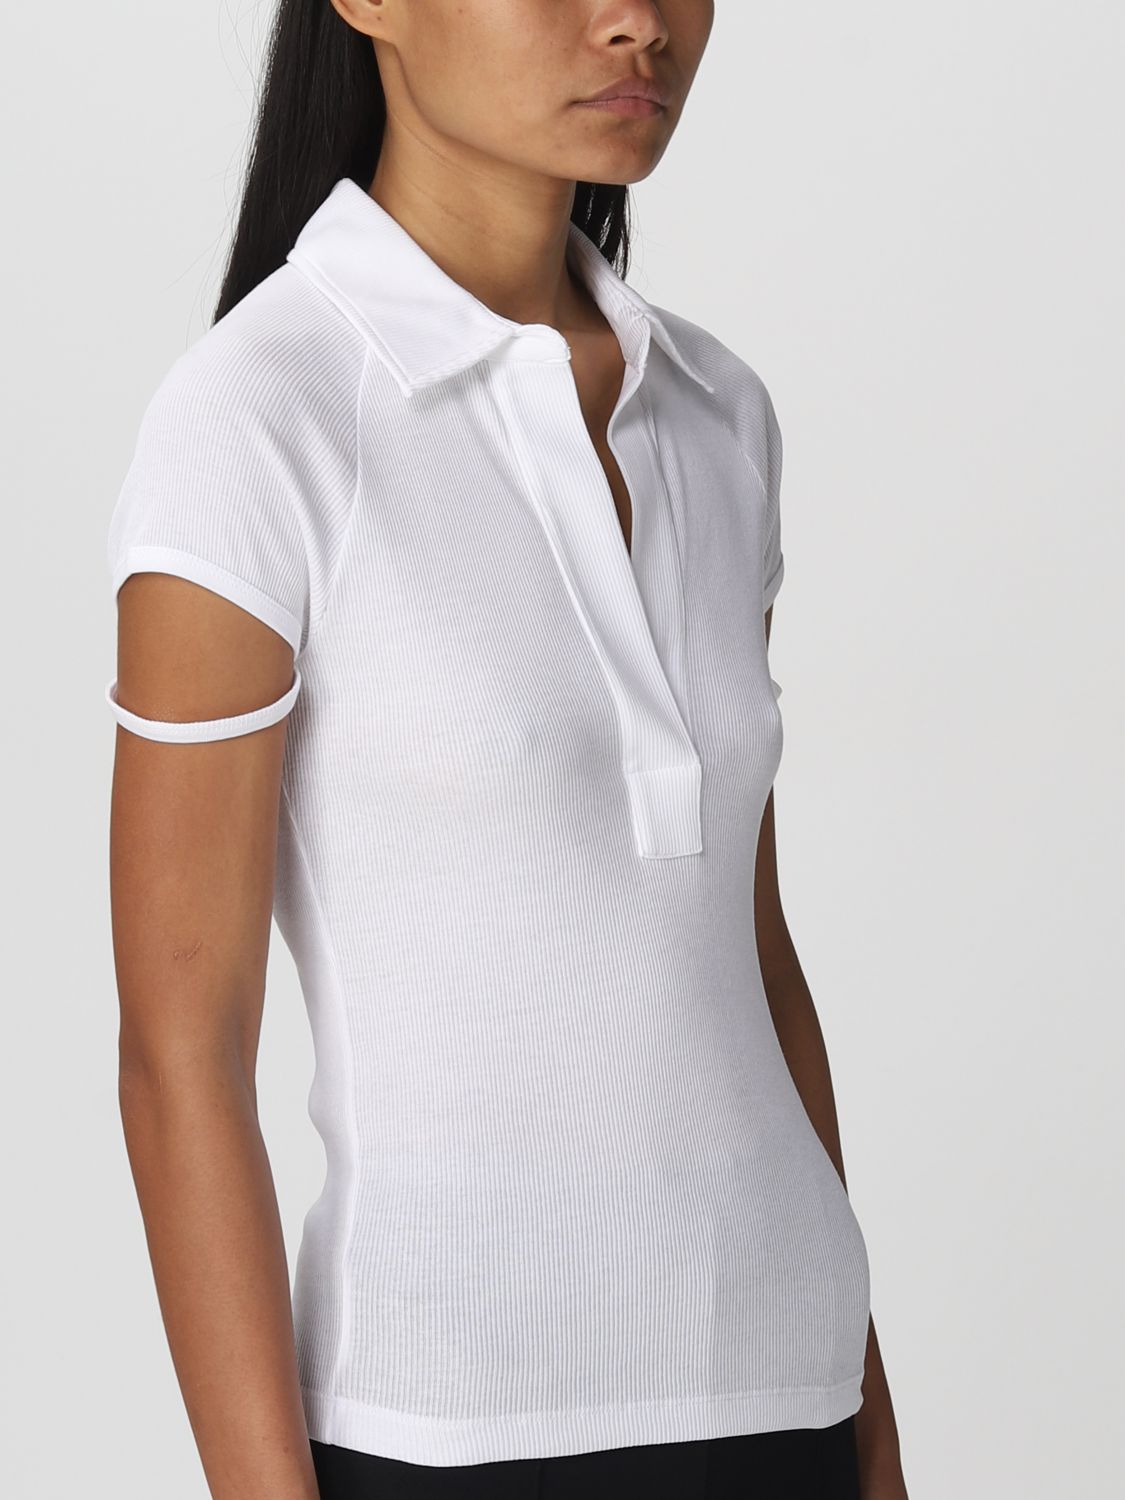 Overlappen het doel Schuine streep HELMUT LANG: polo shirt for woman - White | Helmut Lang polo shirt N01HW506  online on GIGLIO.COM